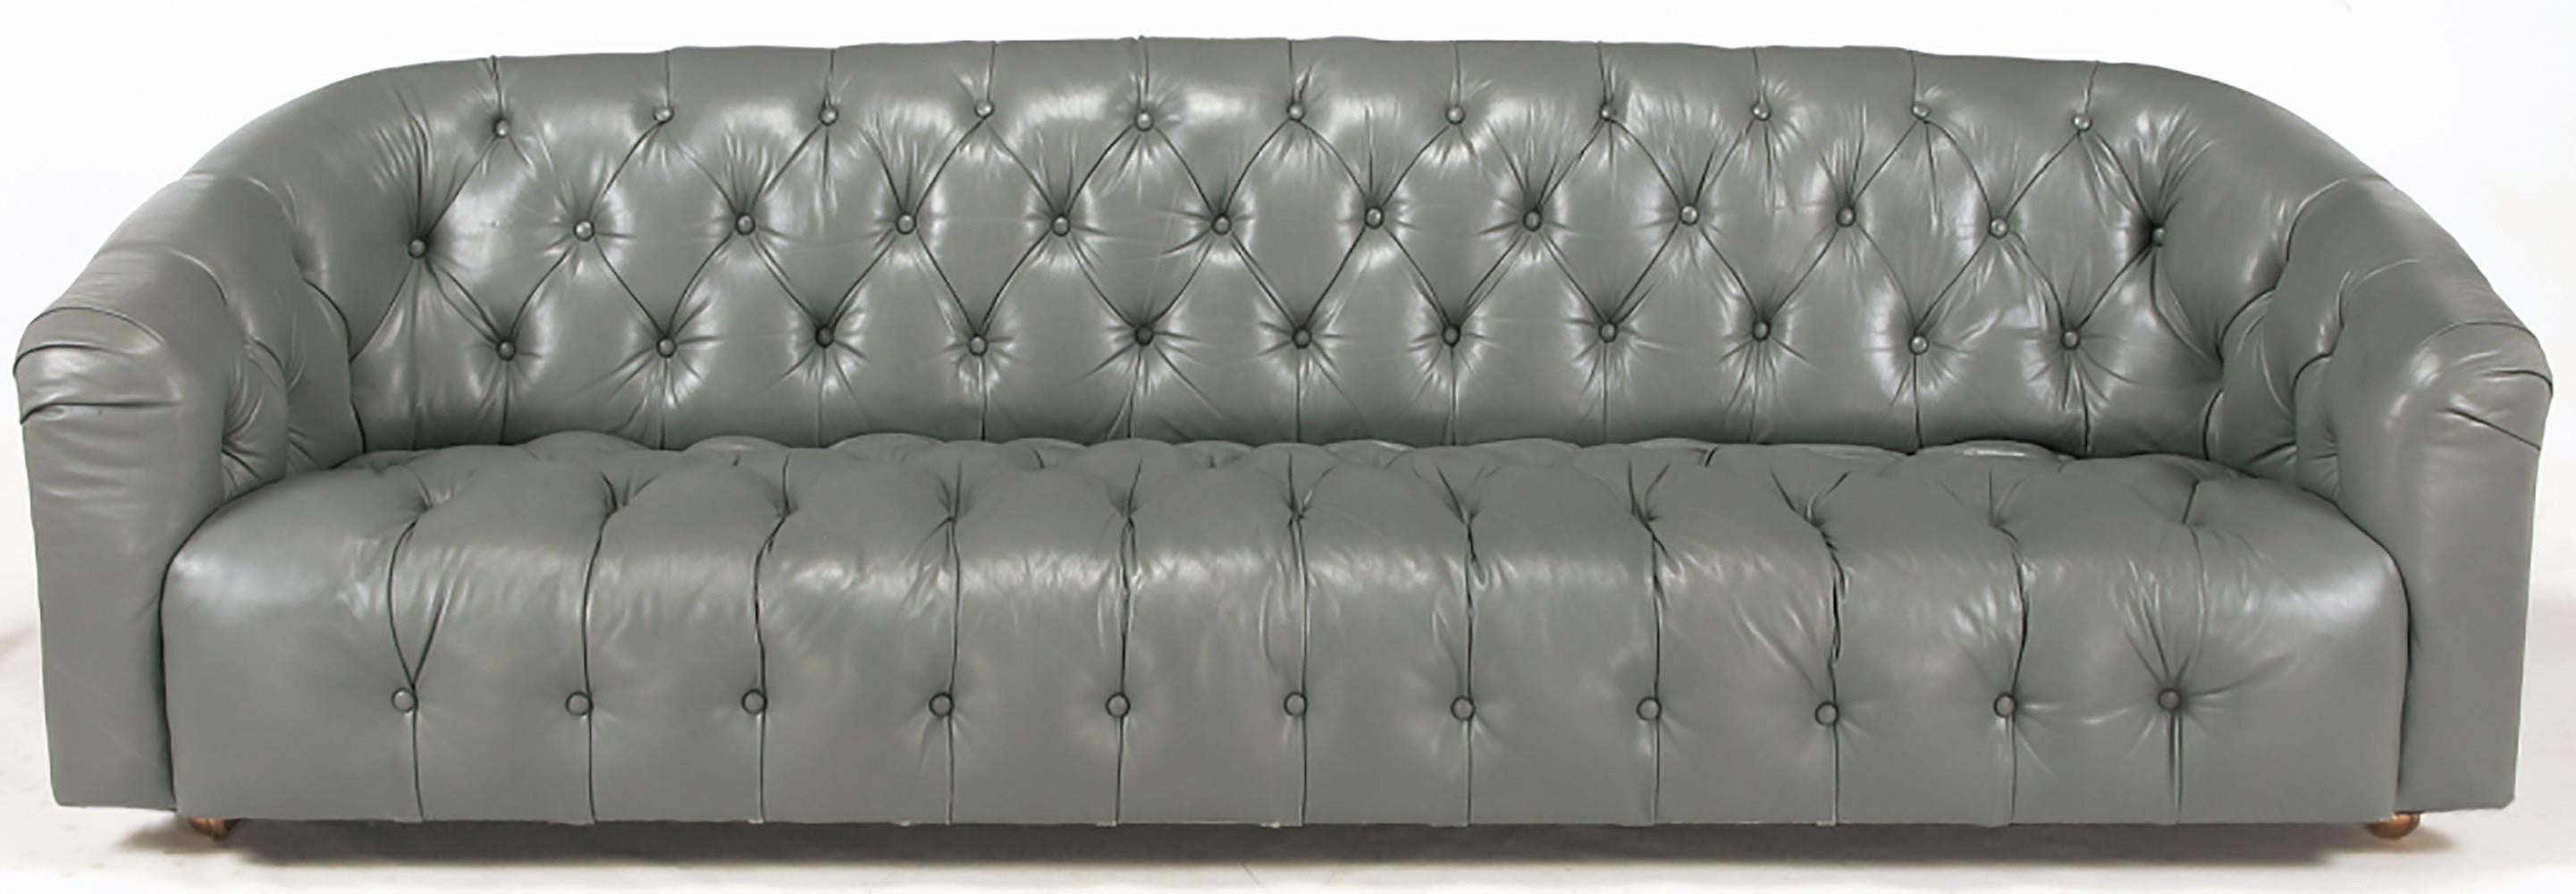 grey leather tufted sofa